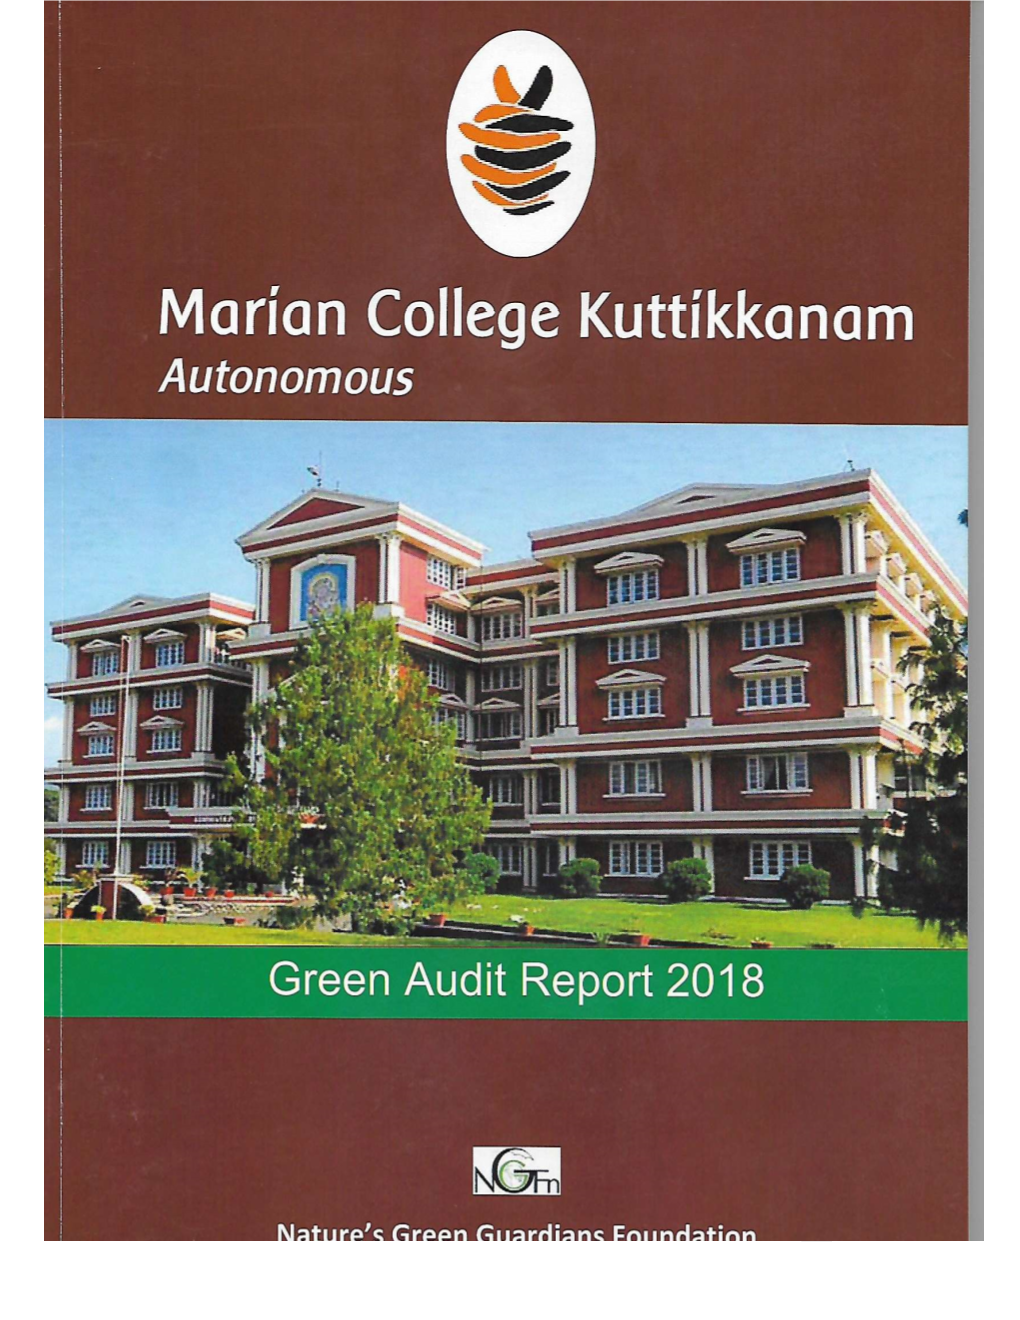 Green Audit Report: Marian College Autonomous Kuttikkanam